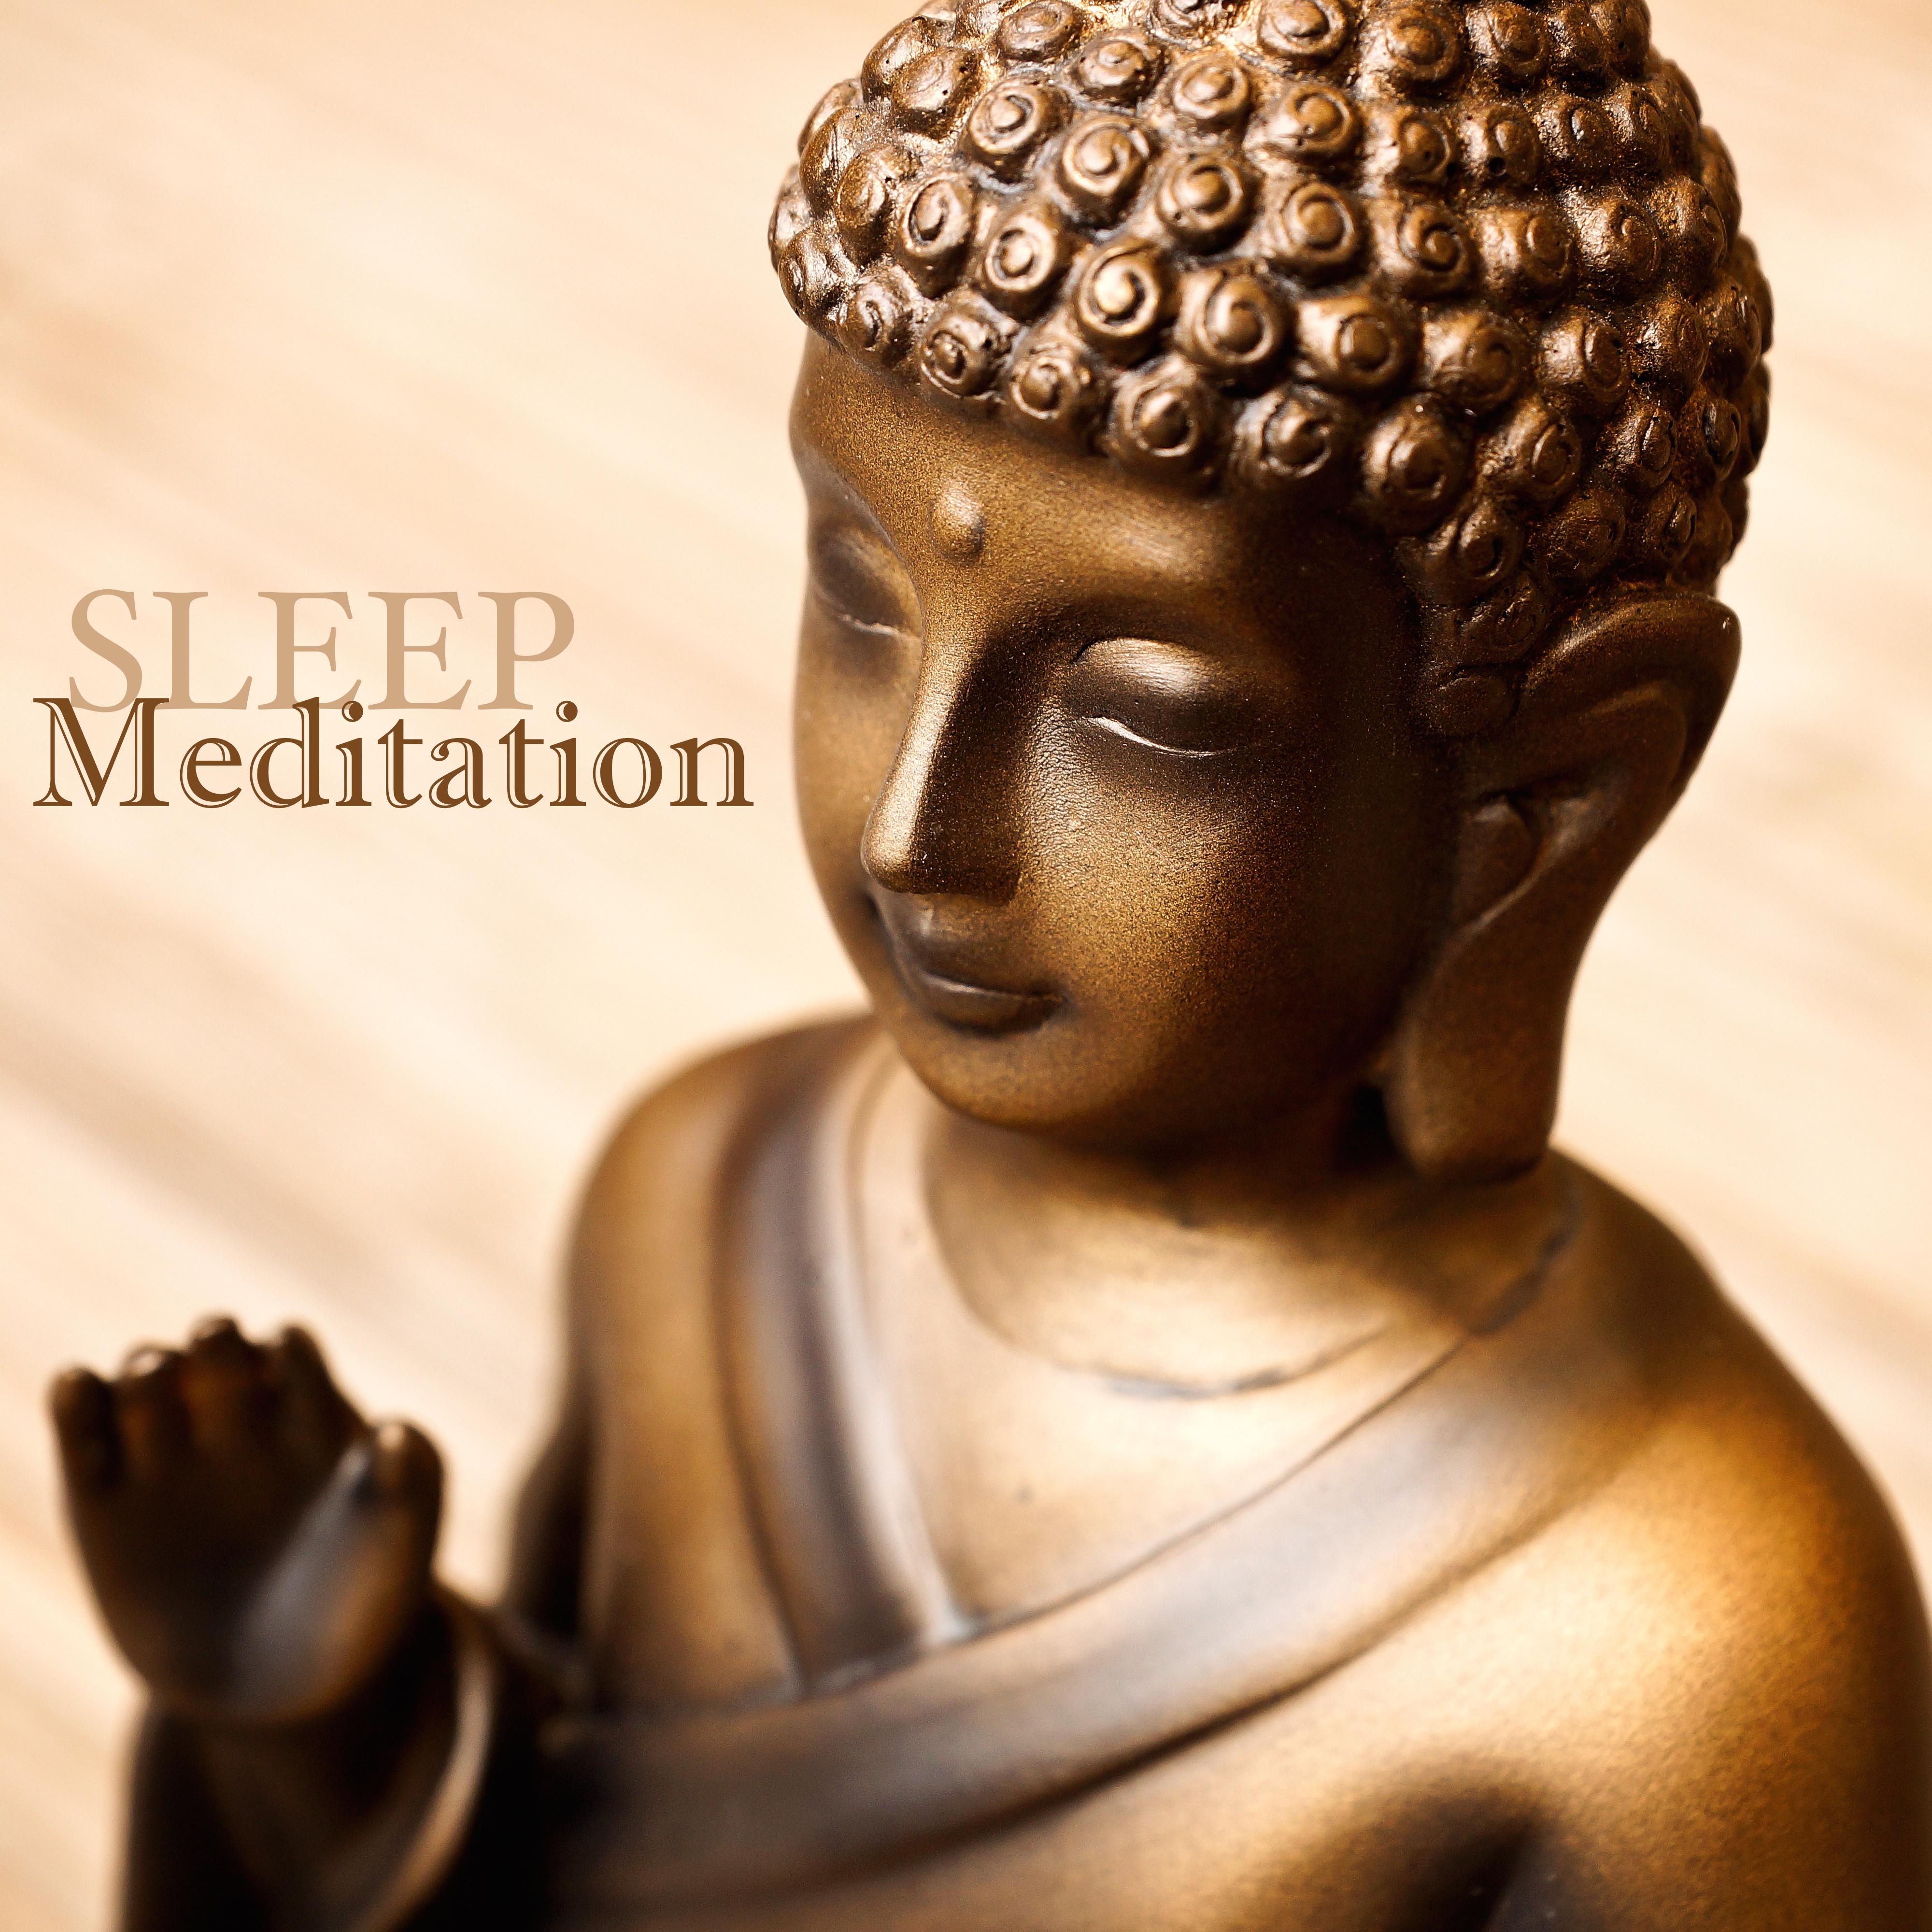 Sleep Meditation 50 Tracks - Sounds of Nature & Relaxing Meditation Music for Sleep, Deep Meditation, Yoga, Spa, Healing